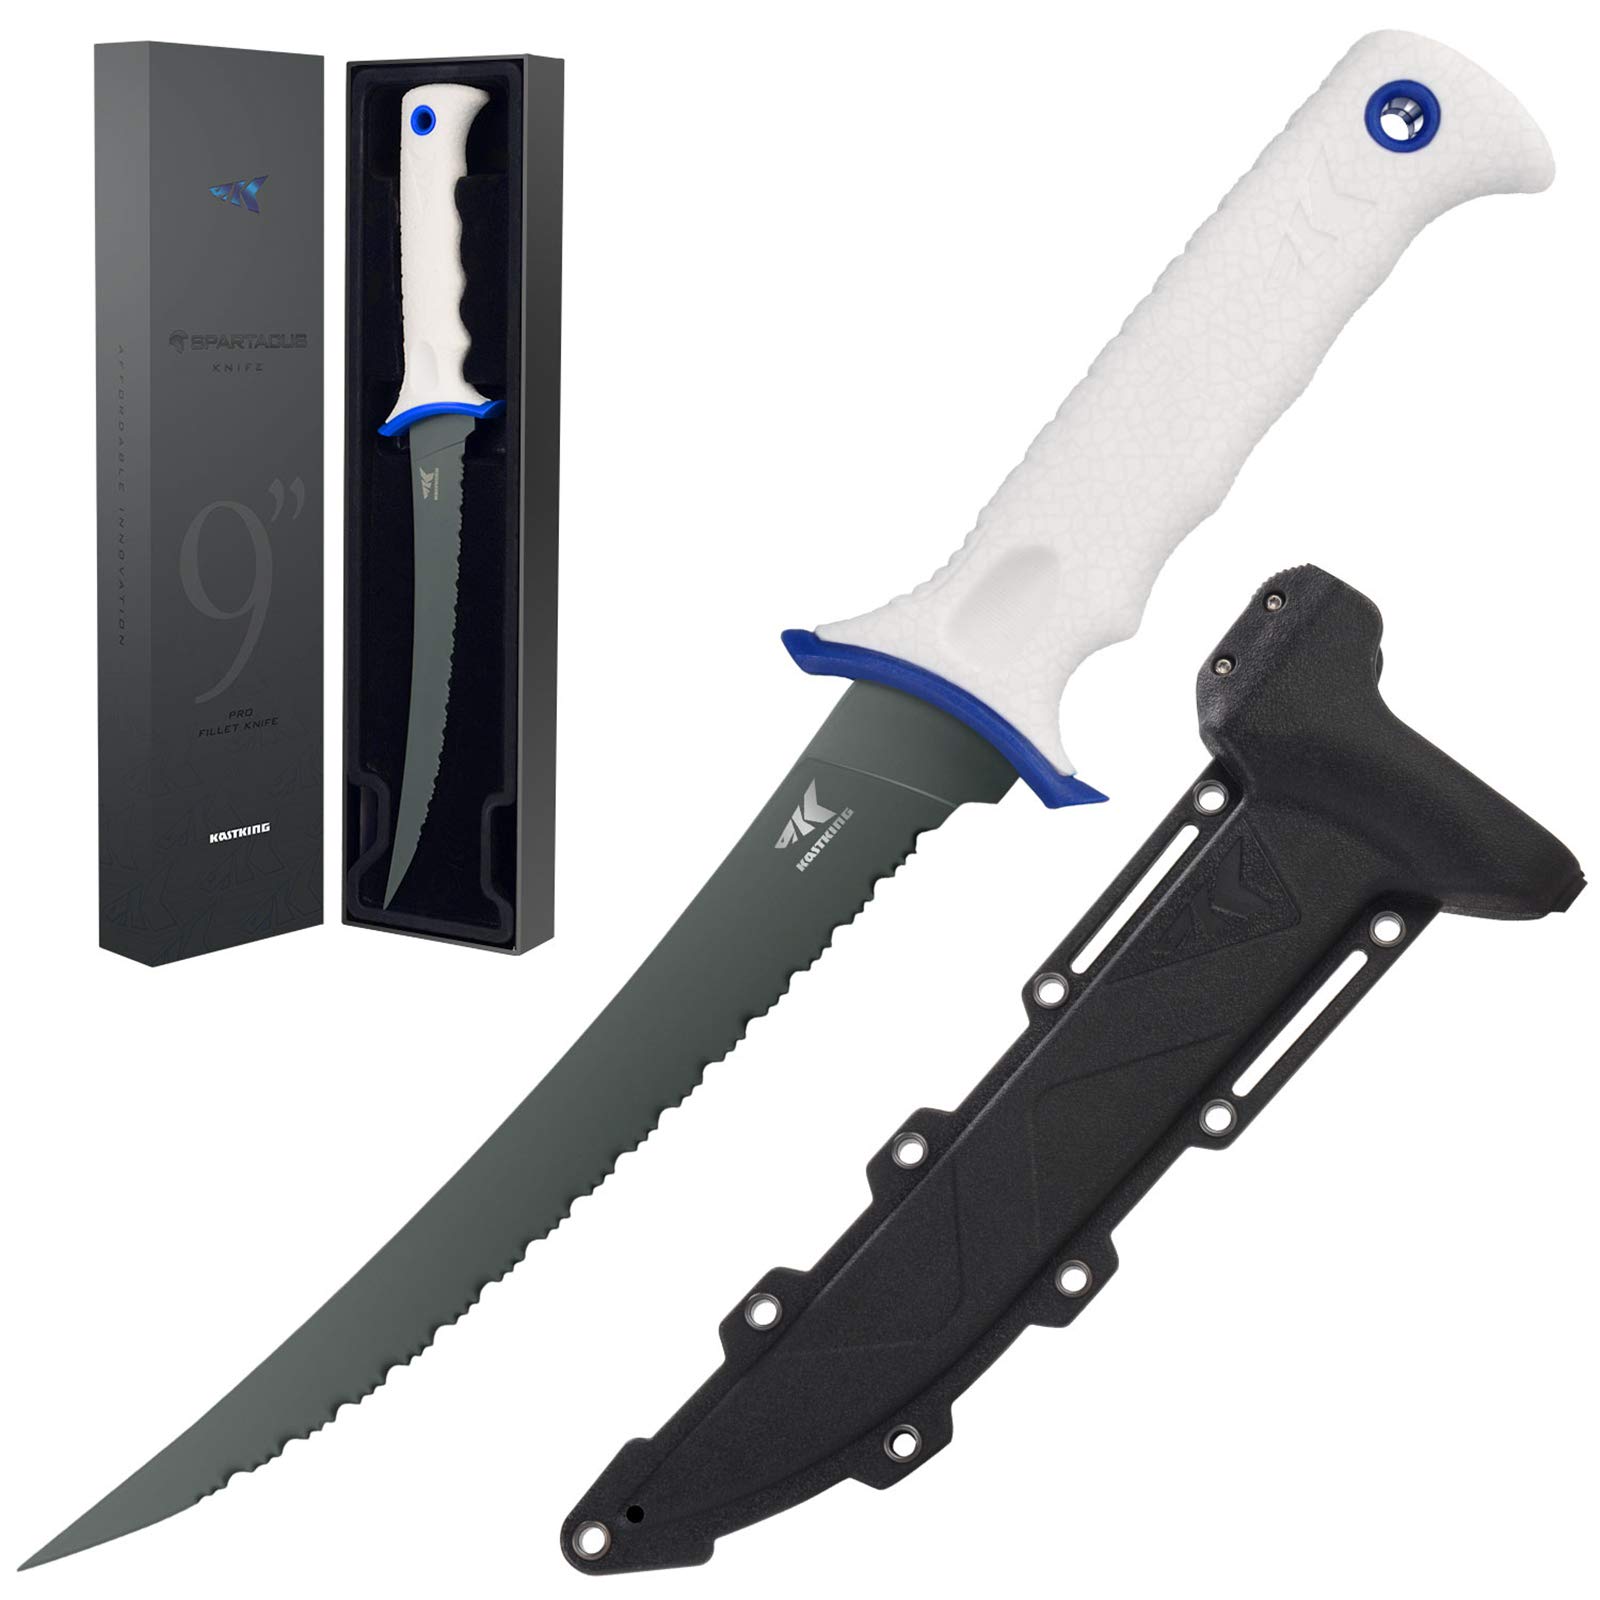 KastKing Spartacus Fillet Knife, Boning and Food Prep Knife, Razor Sharp 8Cr14 Stainless Steel Blade, 9 inch Serrated Fishing Kn